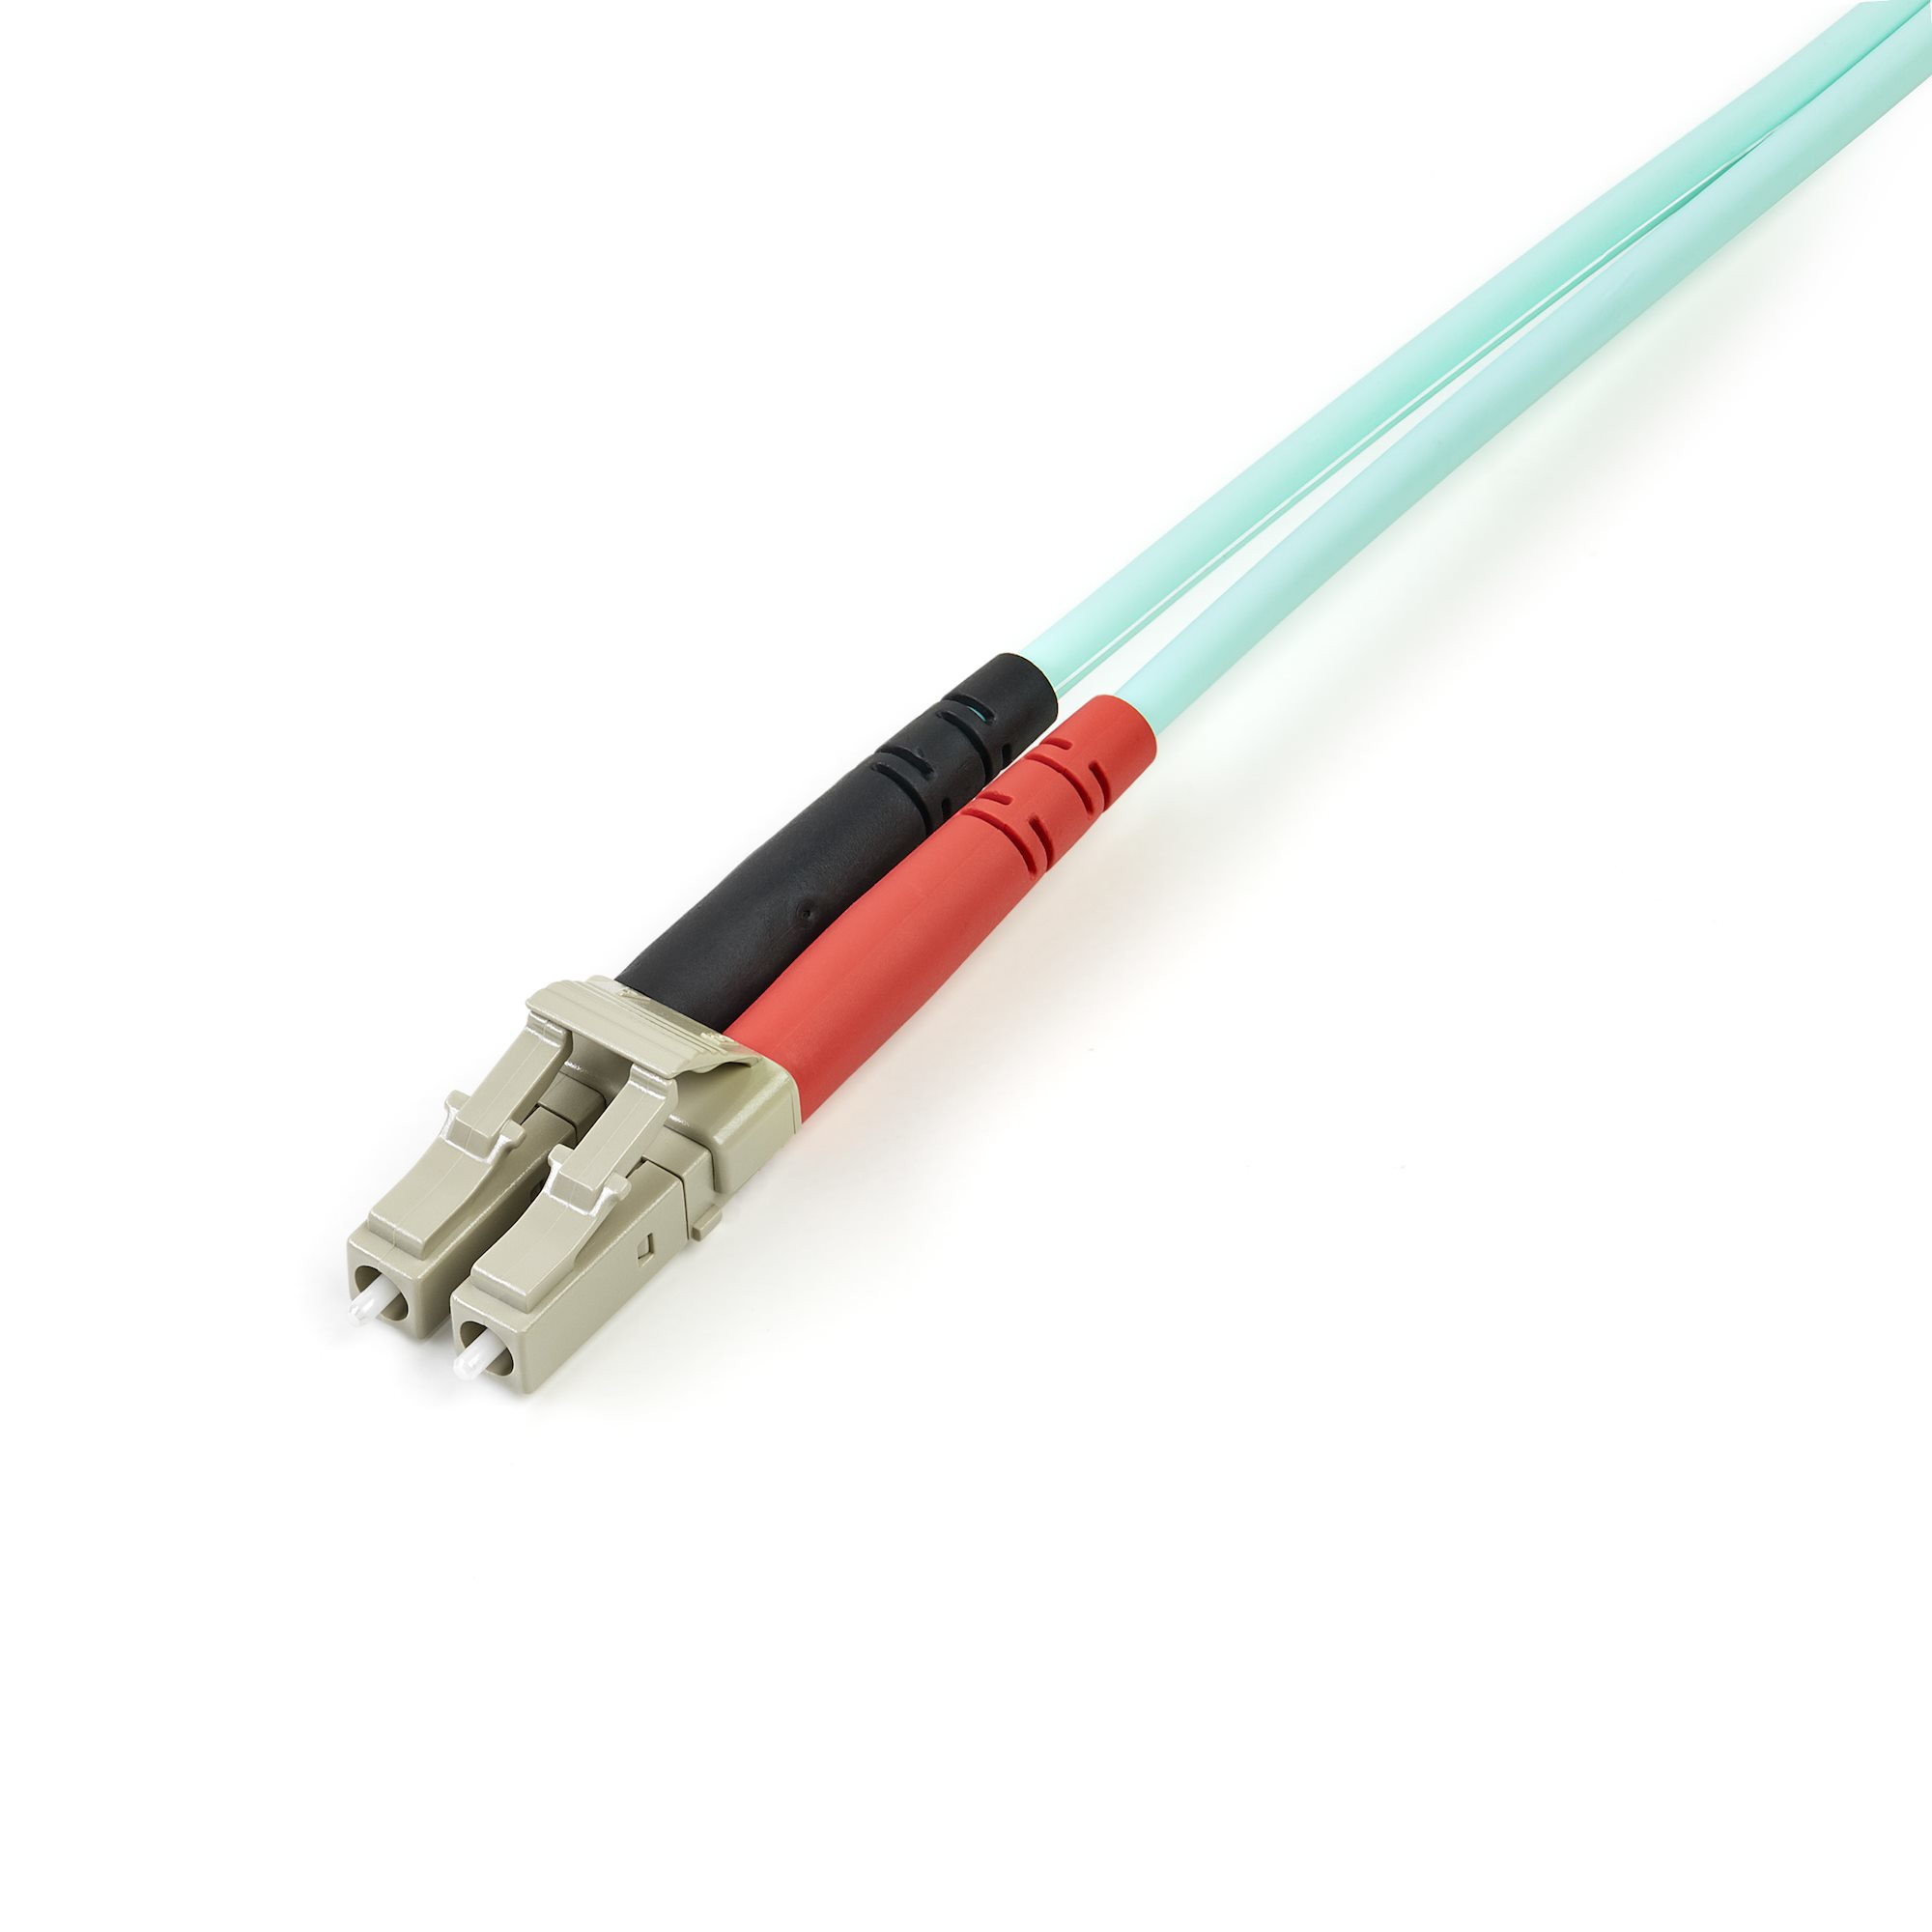 StarTech.com 2m Fiber Optic Cable - 10 Gb Aqua - Multimode Duplex 50/125 - LSZH - LC/LC - OM3 - LC to LC Fiber Patch Cable - Patch-Kabel - LC Multi-Mode (M)